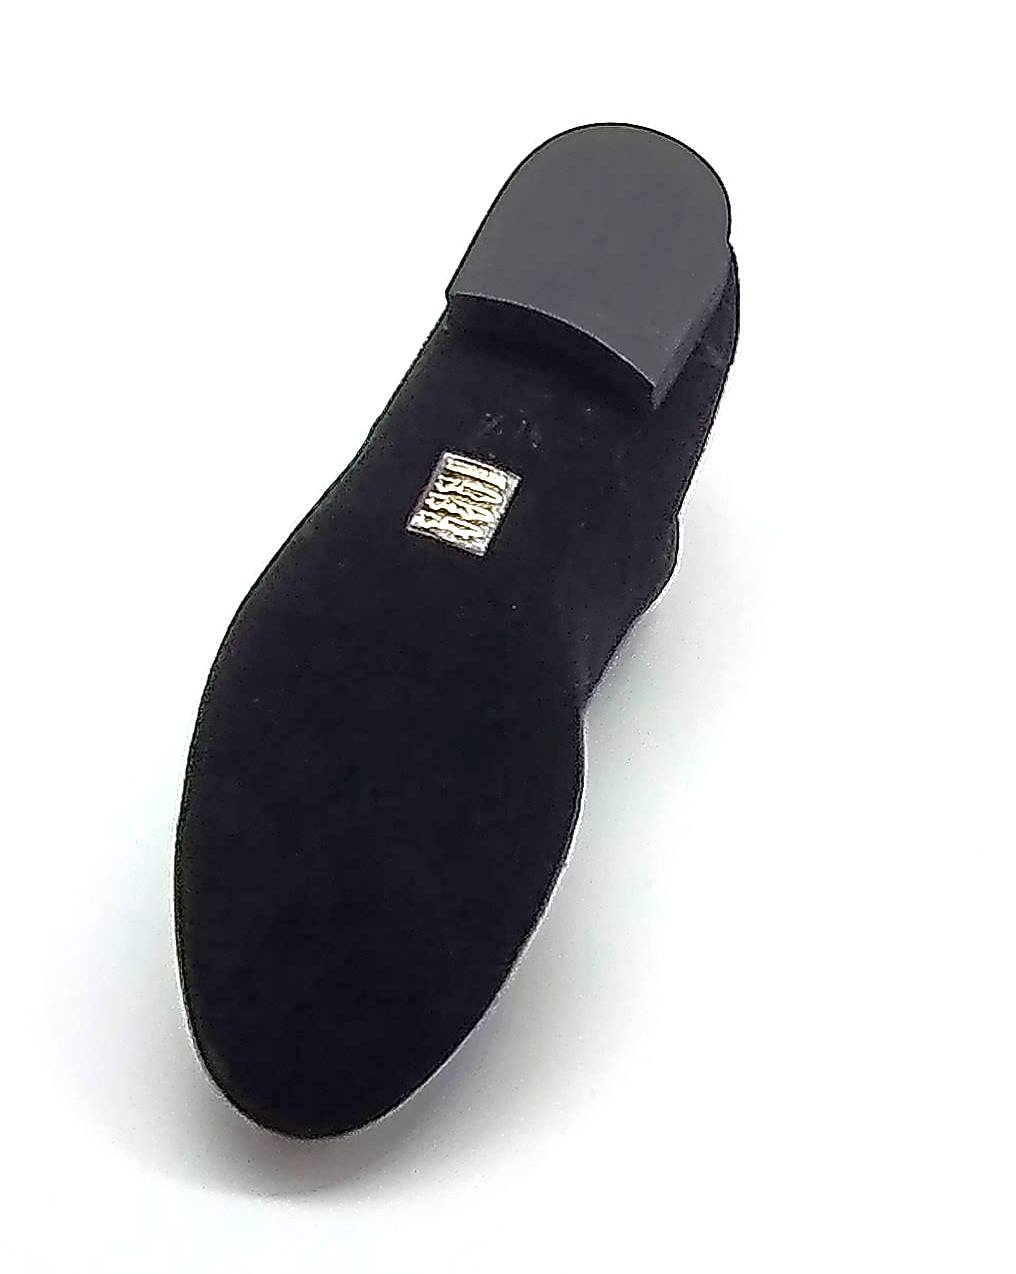 Tamango black snake leather contrast suede dance sole